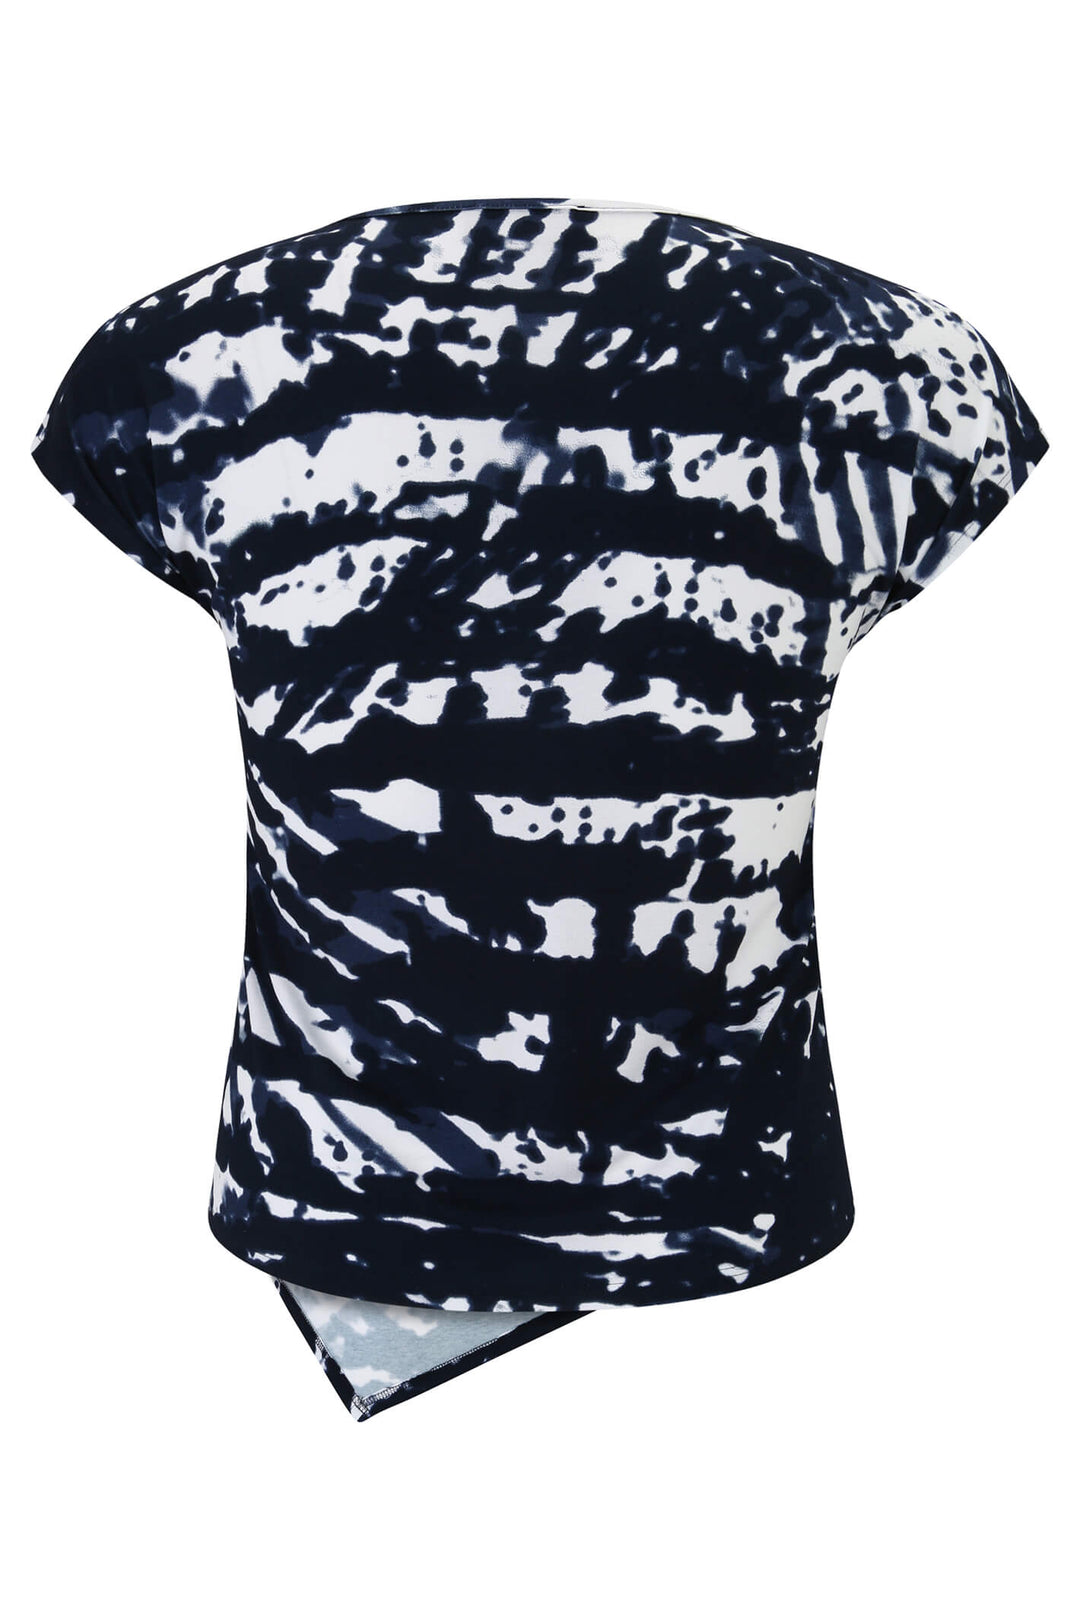 Doris Streich 501 505 Navy Print Asymmetric T-Shirt - Shirley Allum Boutique